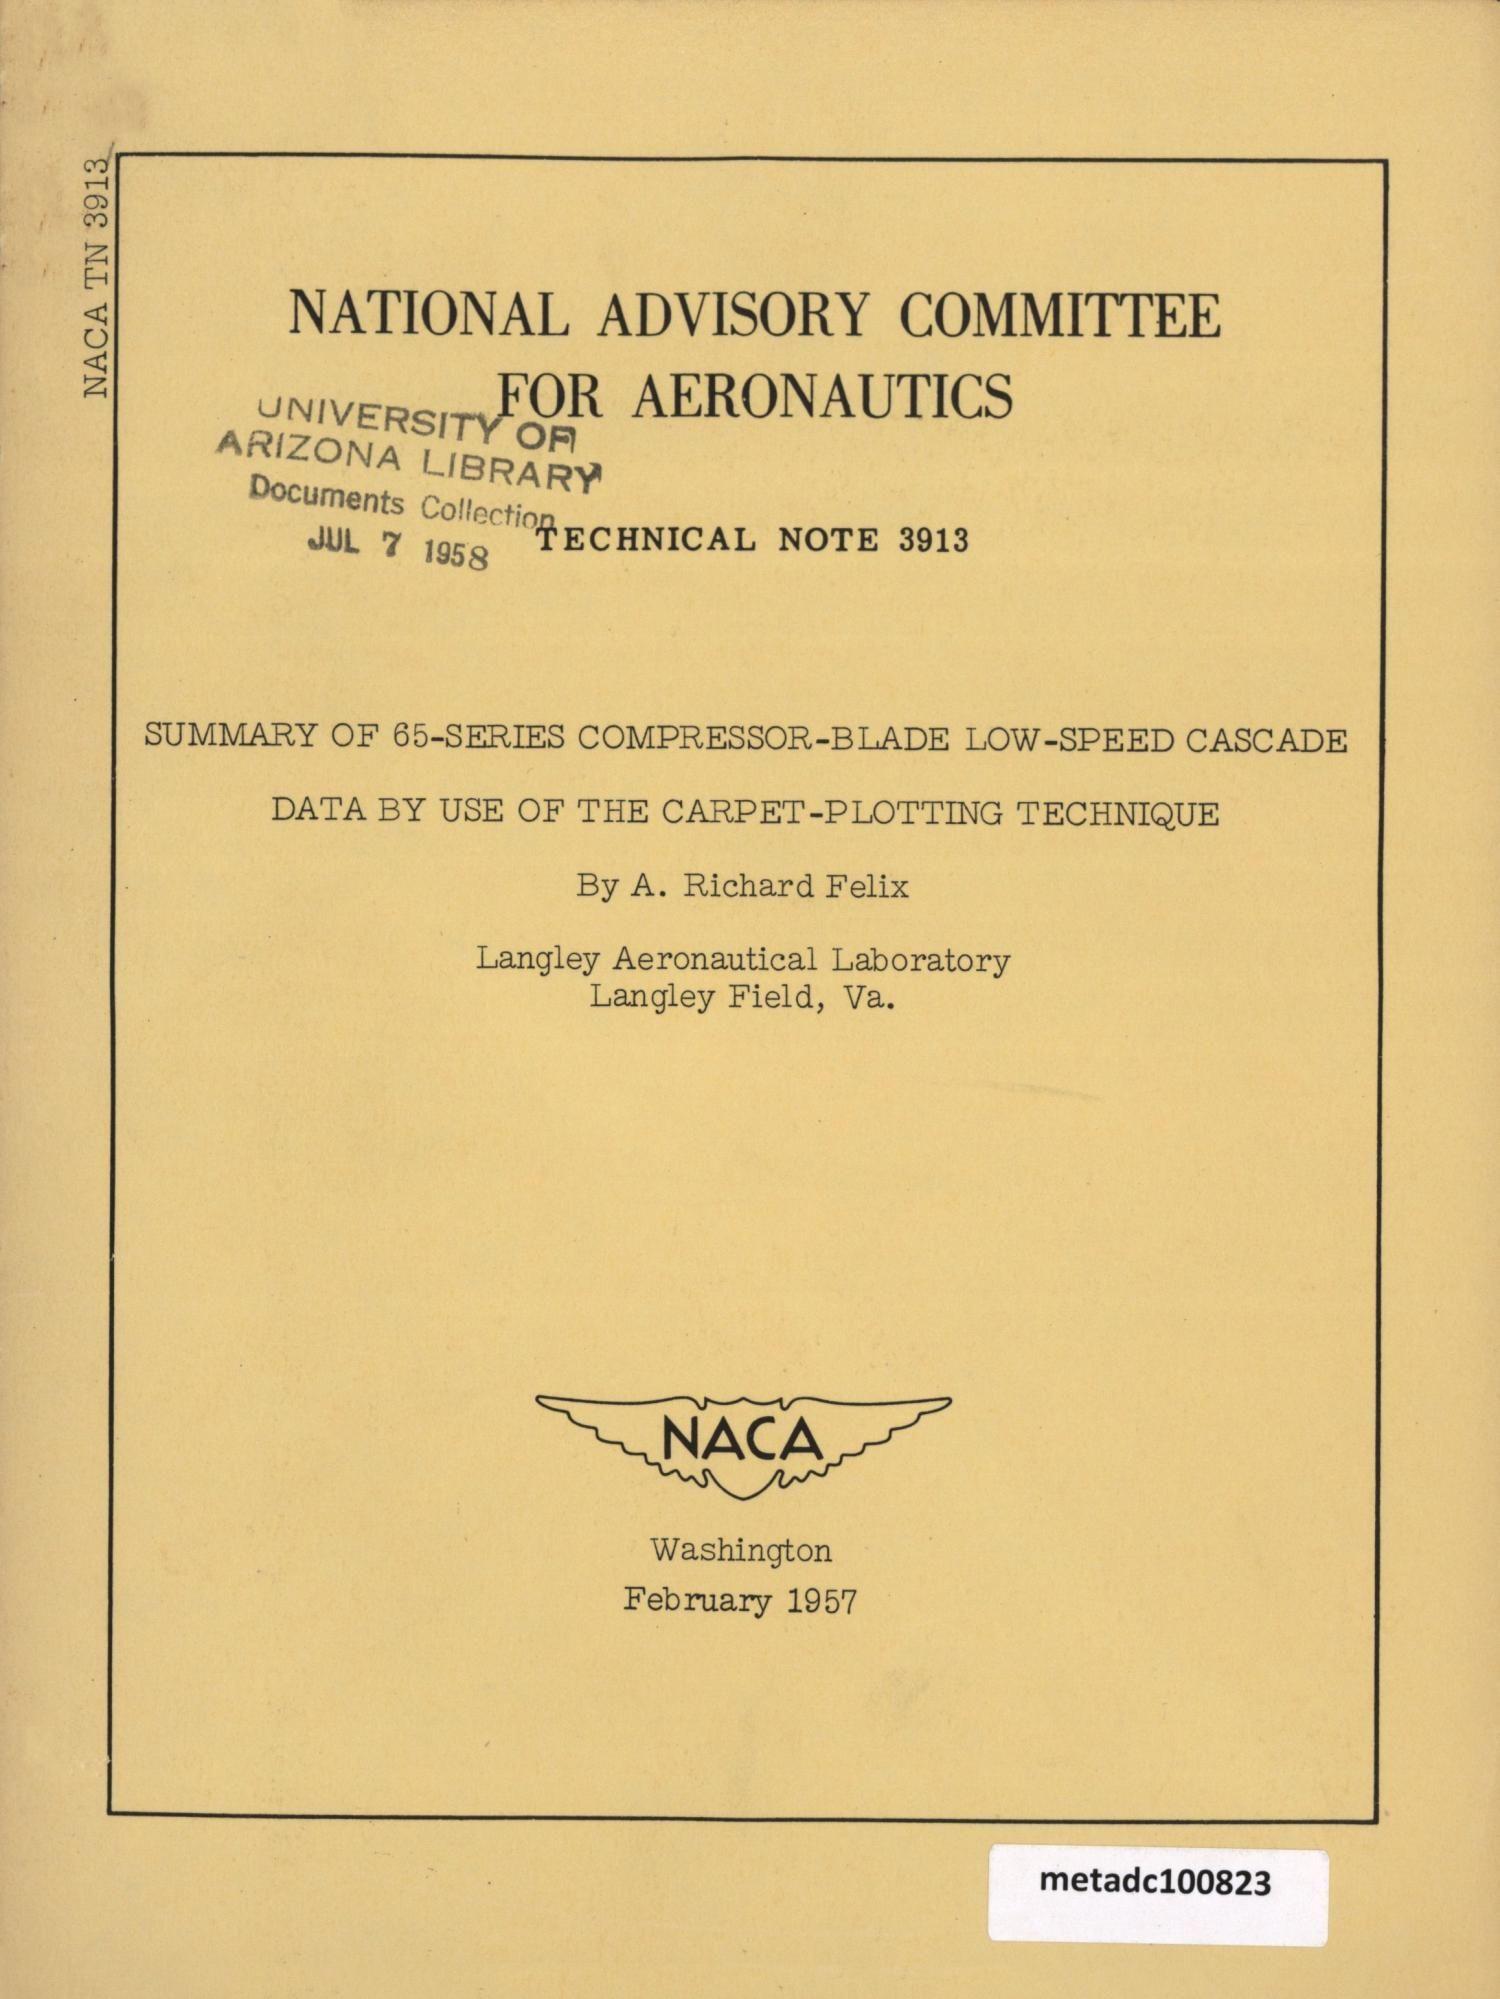 Aeronautics NACA Logo - National Advisory Committee for Aeronautics (NACA) - Digital Library